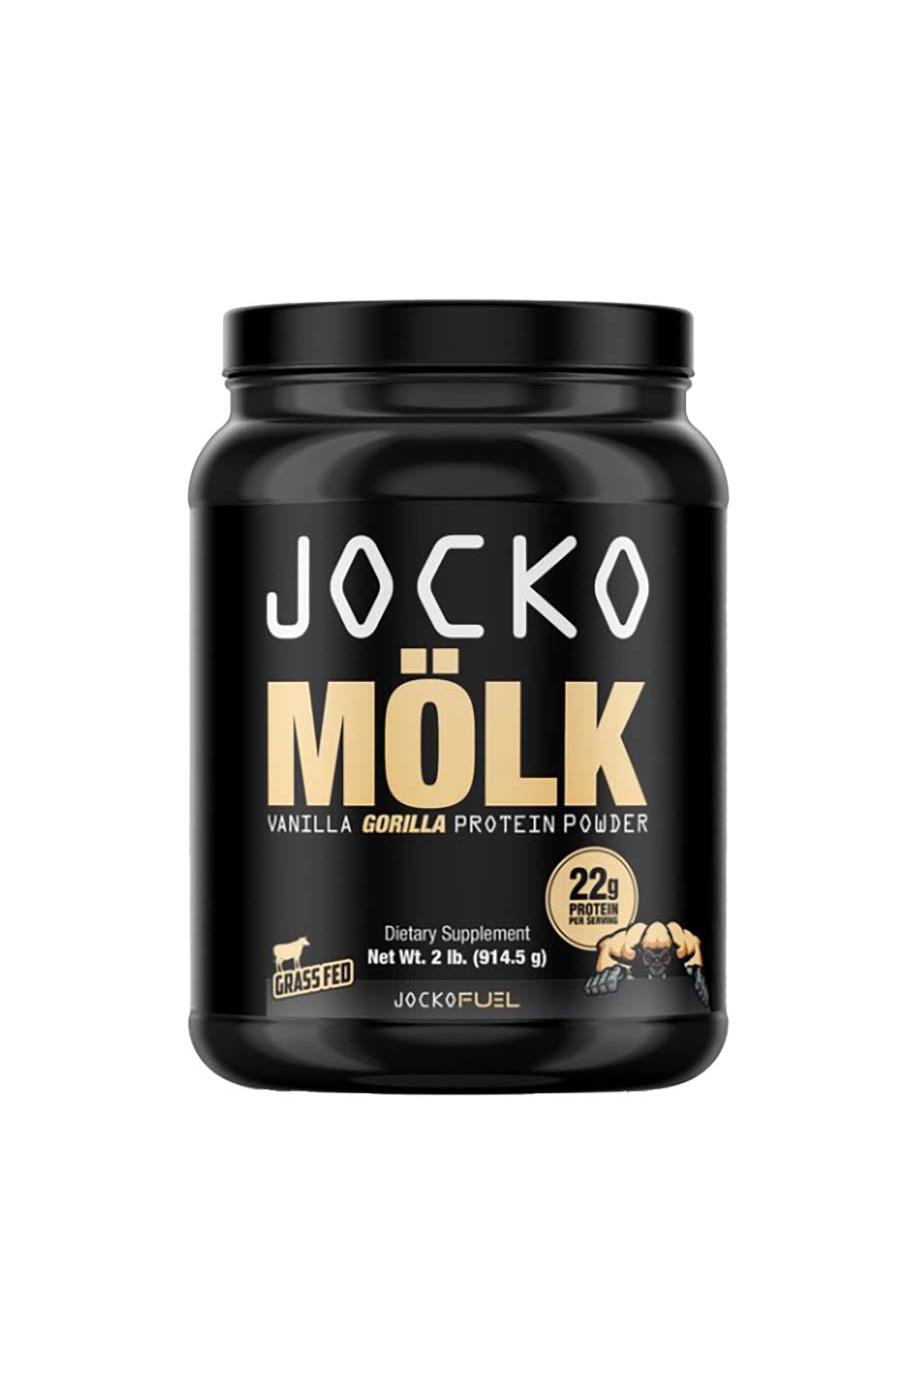 Jocko Molk Vanilla Gorilla Protein Powder; image 1 of 2